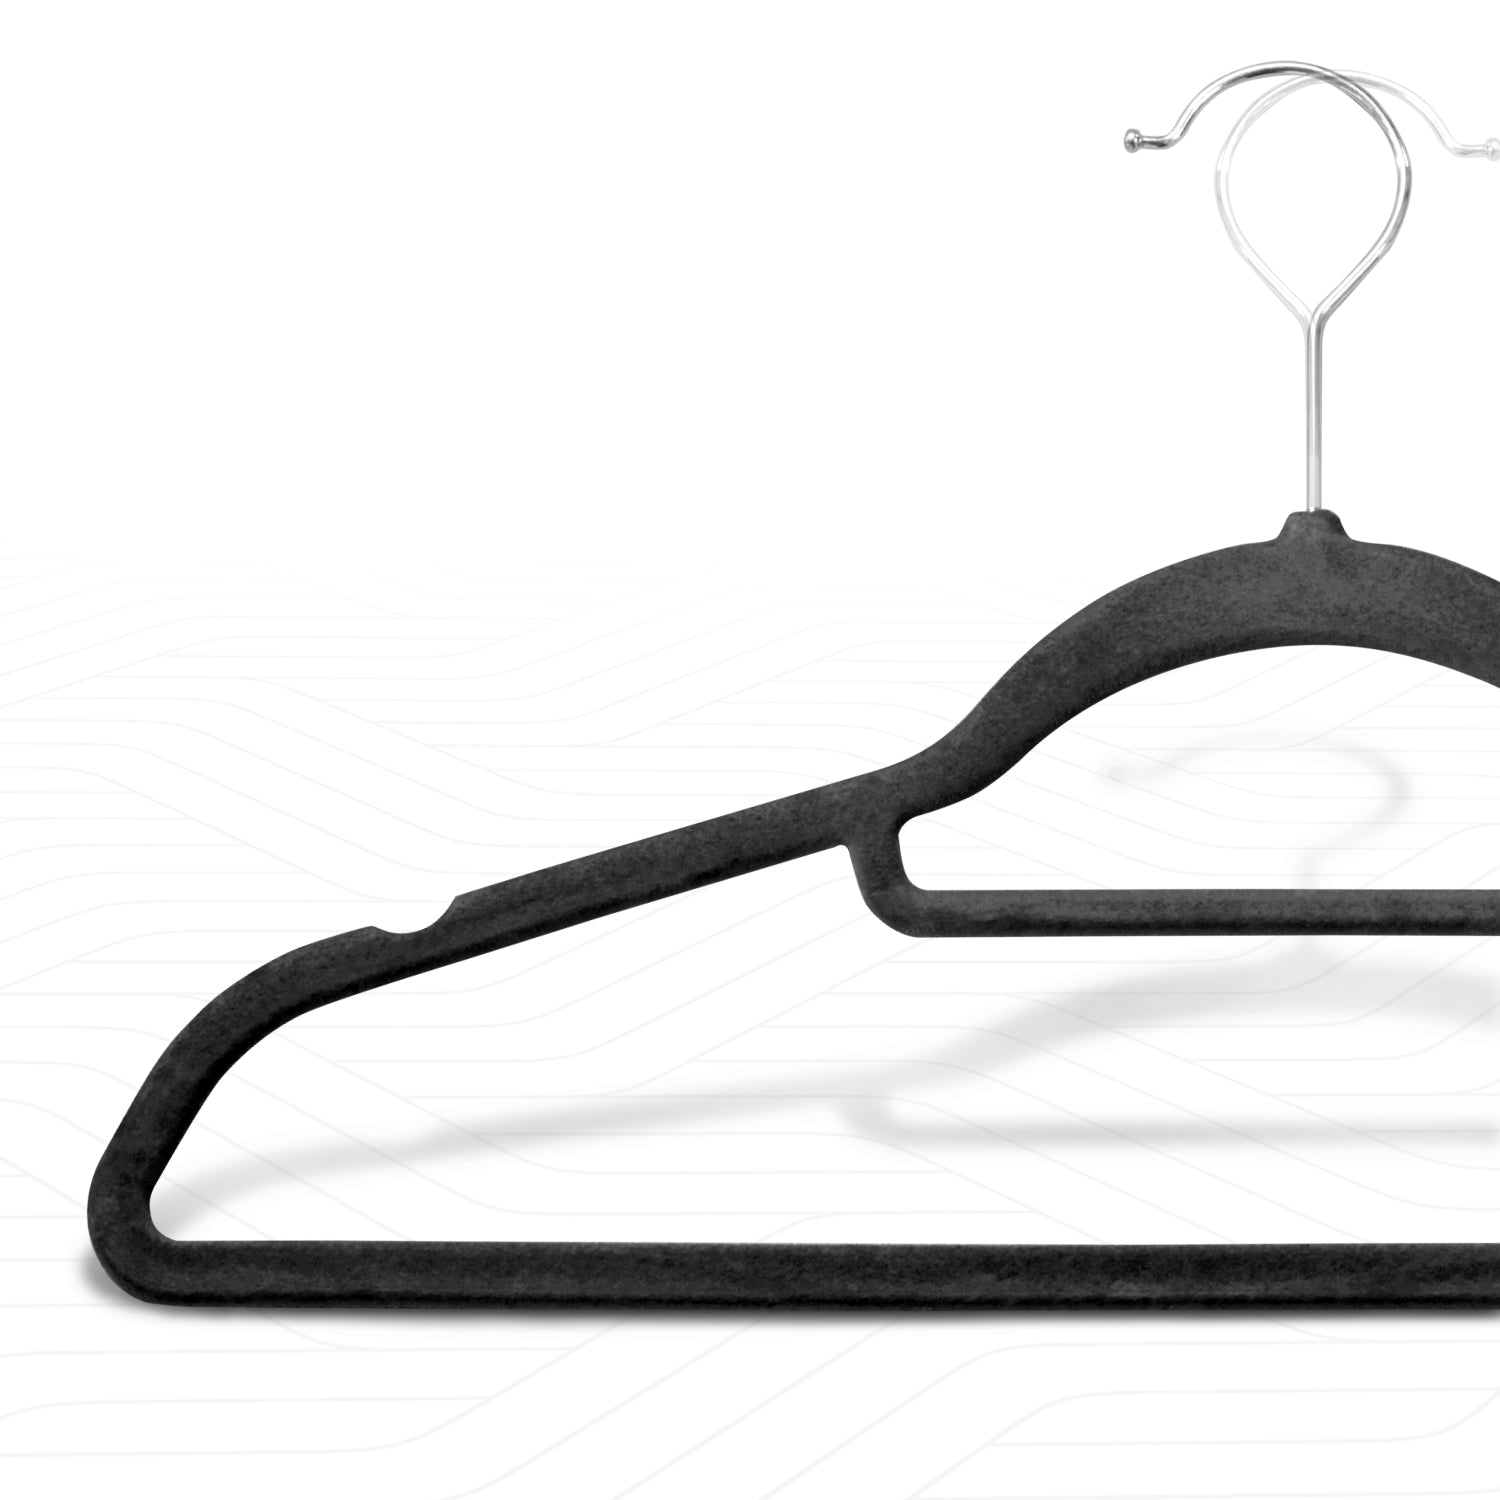 20pcs - 50pcs Velvet Hangers -Space- Saving Non-Slip Clothes Hangers with 360° Swivel Hook, Ultra-Thin Design for Maximized Closet Space